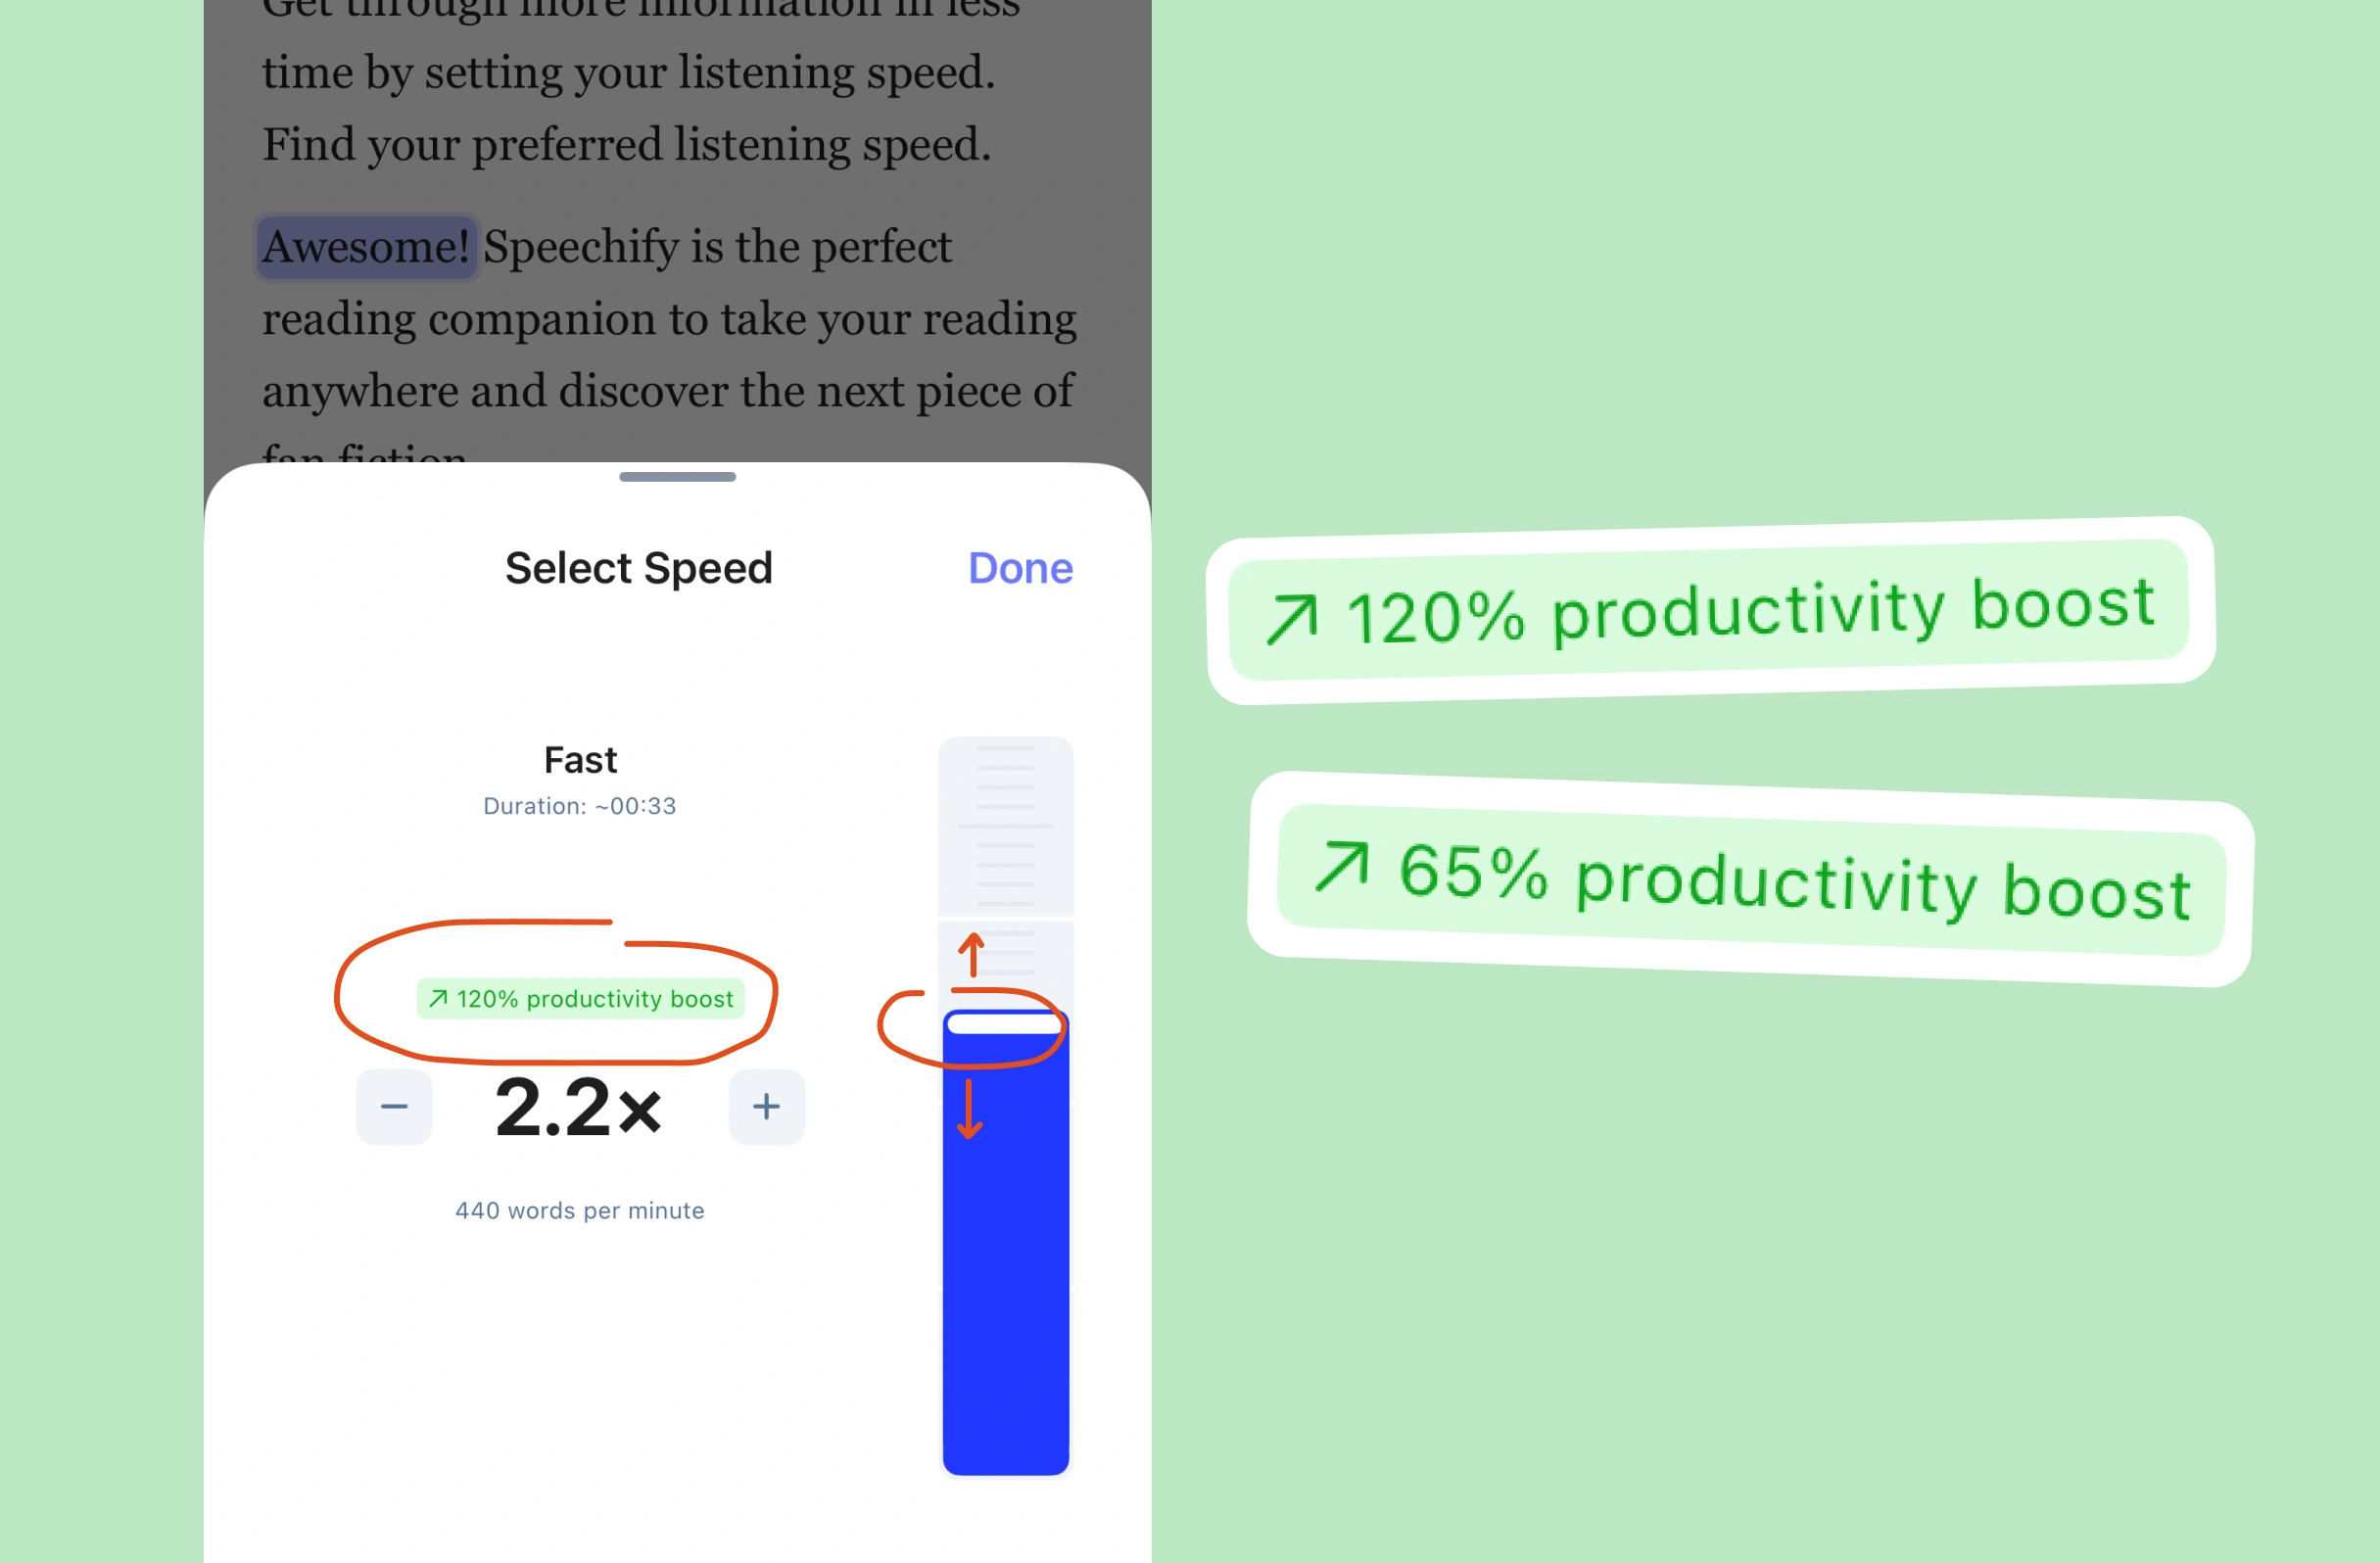 Speed = productivity boost